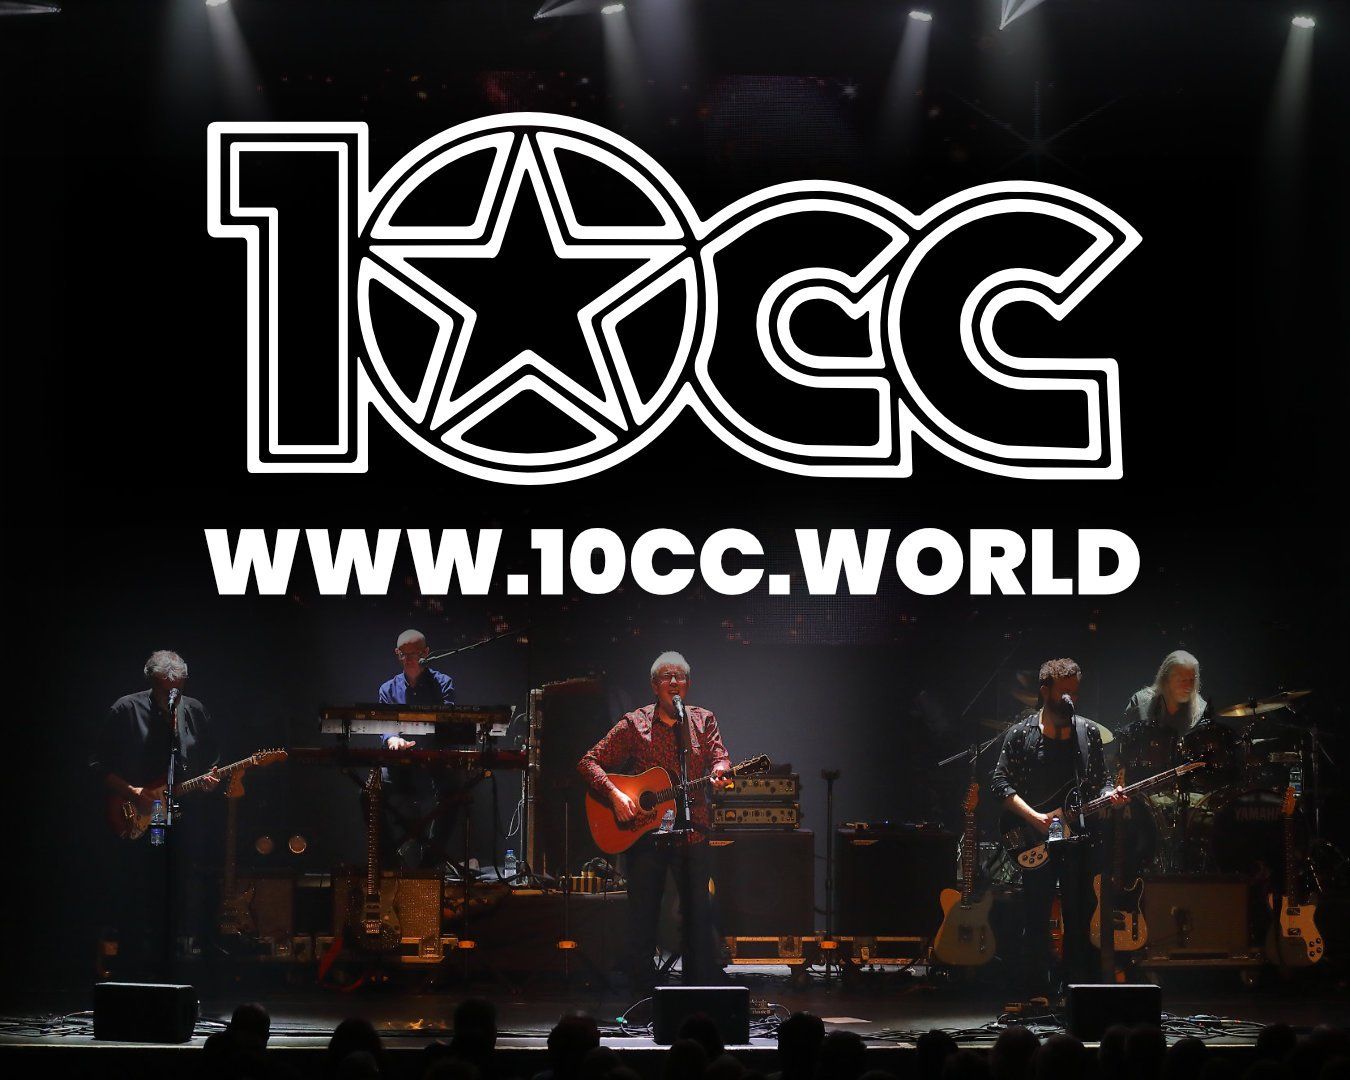 10cc | Official Website of 10cc